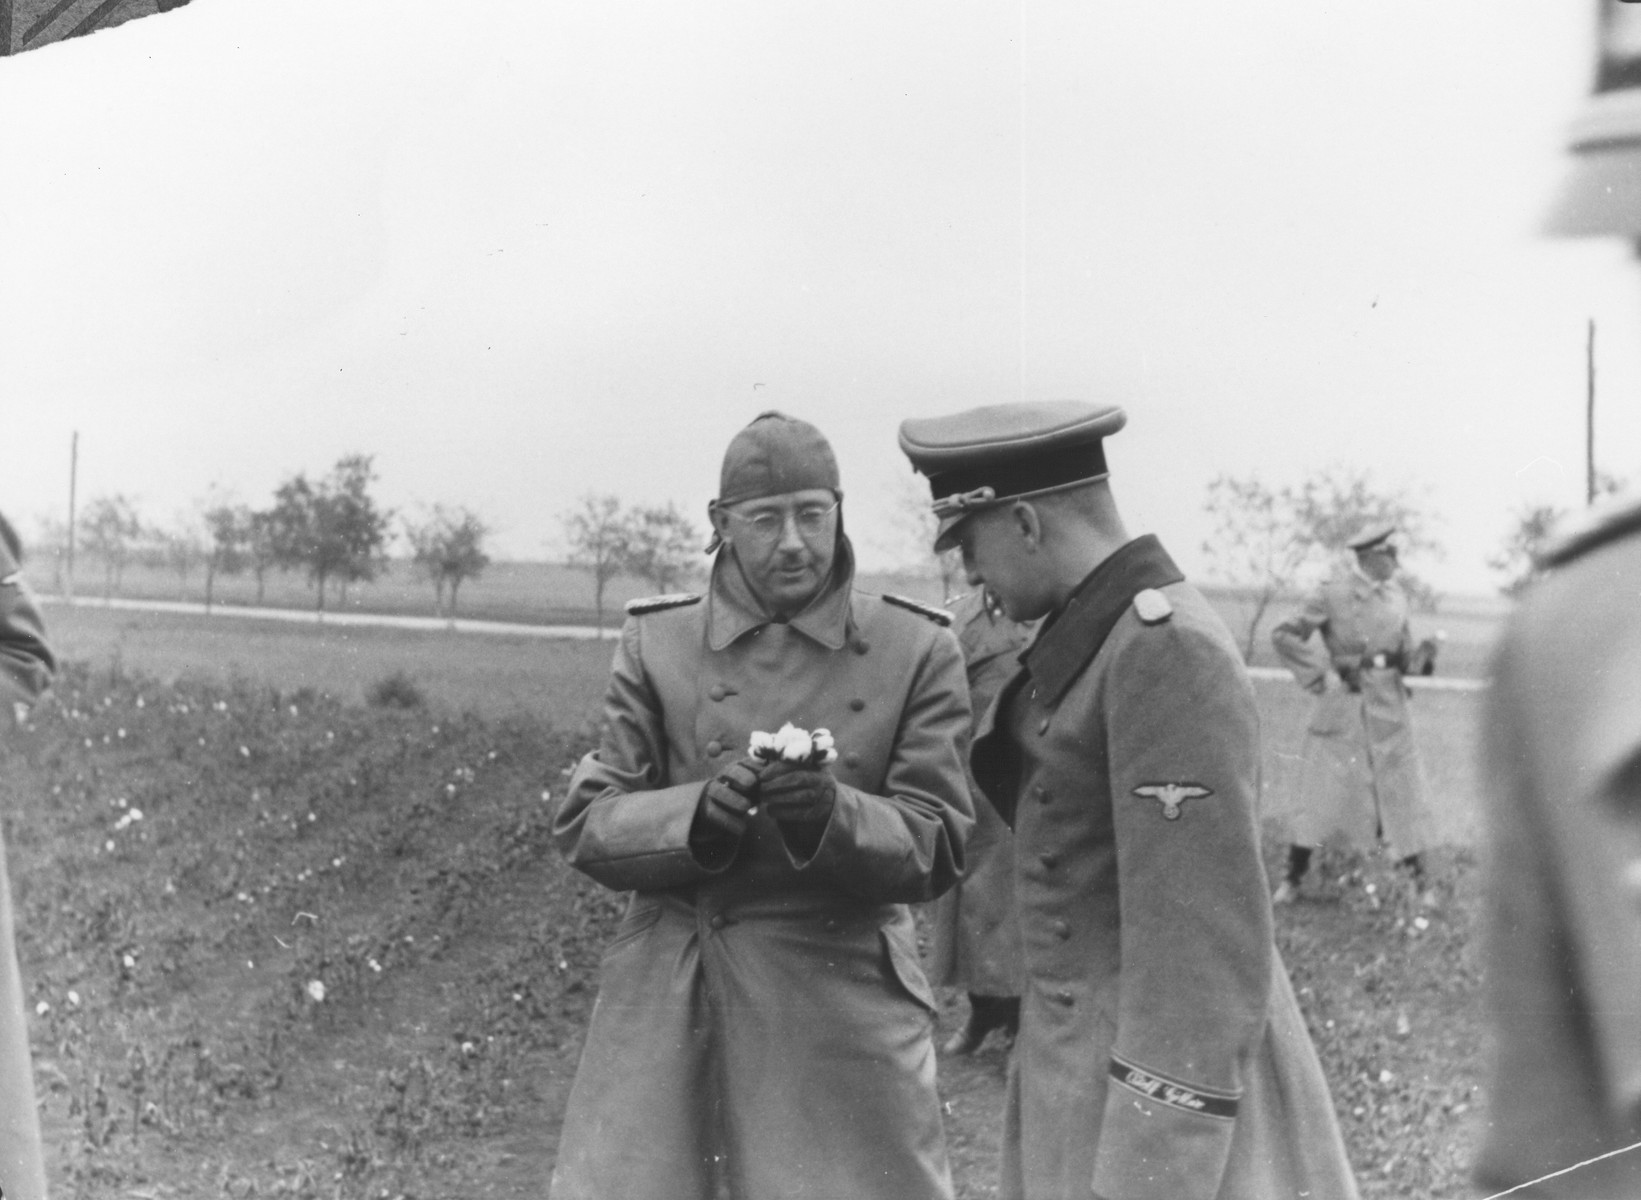 Reichsfuehrer-SS Heinrich Himmler inspects a cotton crop during a visit to the Crimea.

Standing next to Himmler is an officer of the Waffen SS-Division Leibstandarte Adolf Hitler.